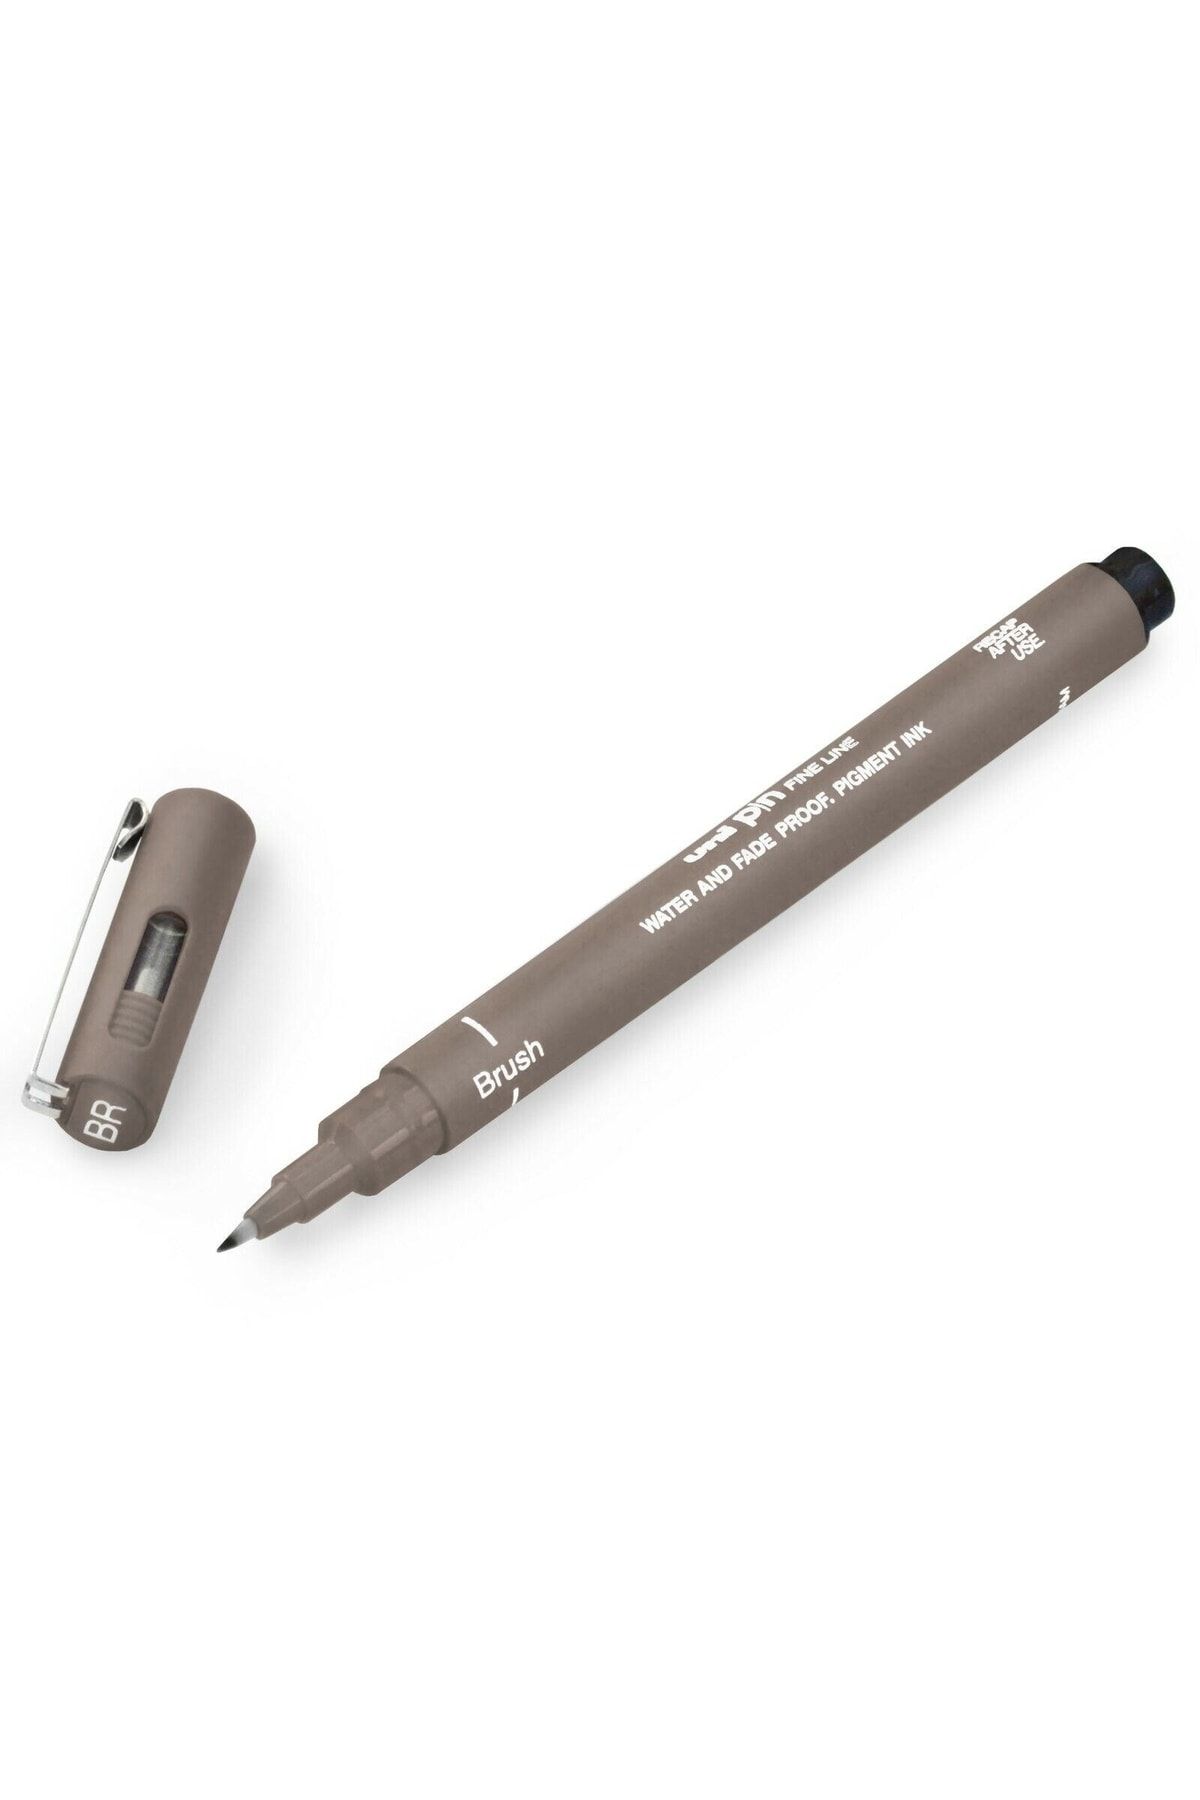 uni-ball Uni Pin Fineliner Drawing Pen - Dark Grey Ink - Brush-fırça Uç-1 Adet